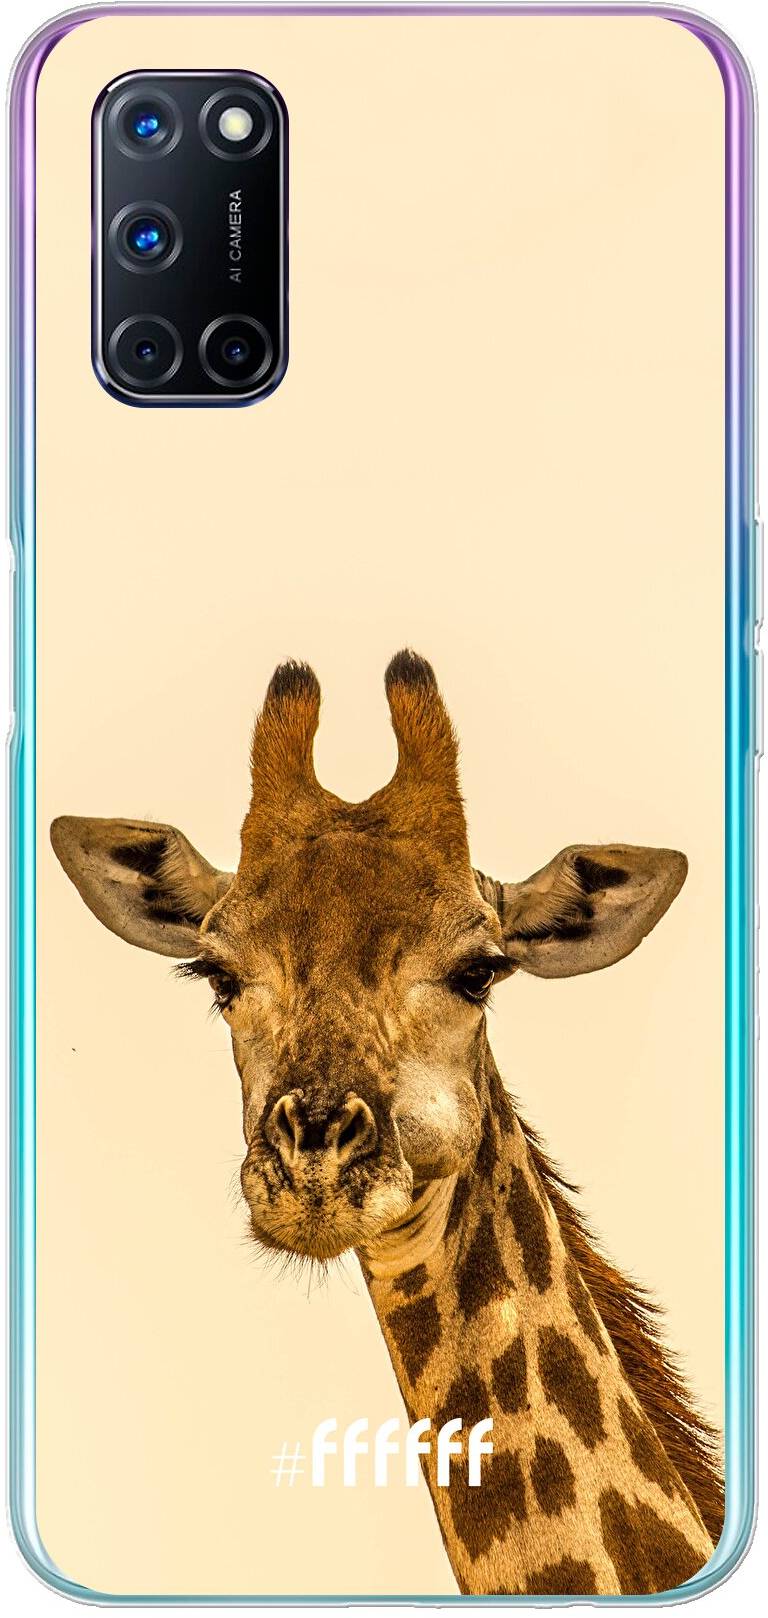 Giraffe A92